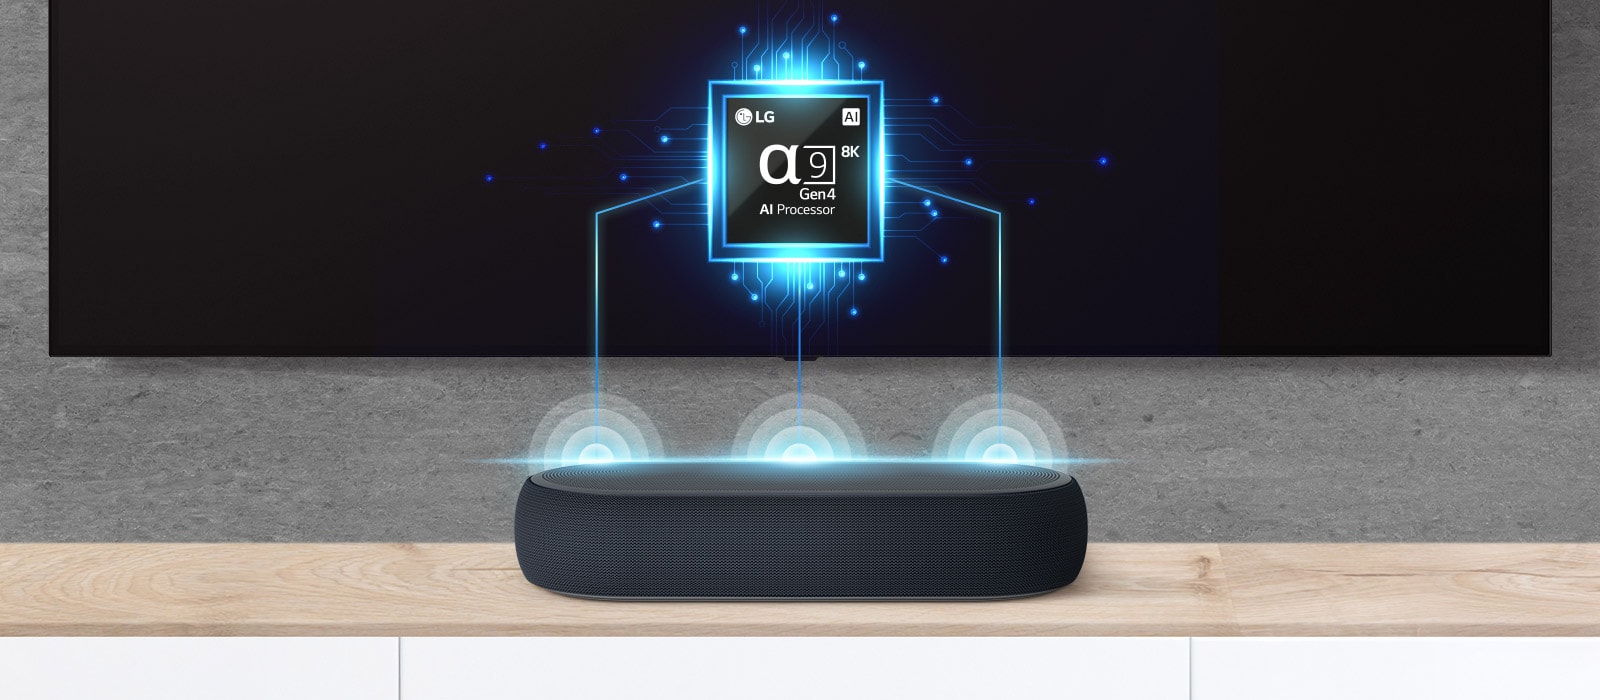 Upgrade Your Sound bar with LG’s AI Processor1